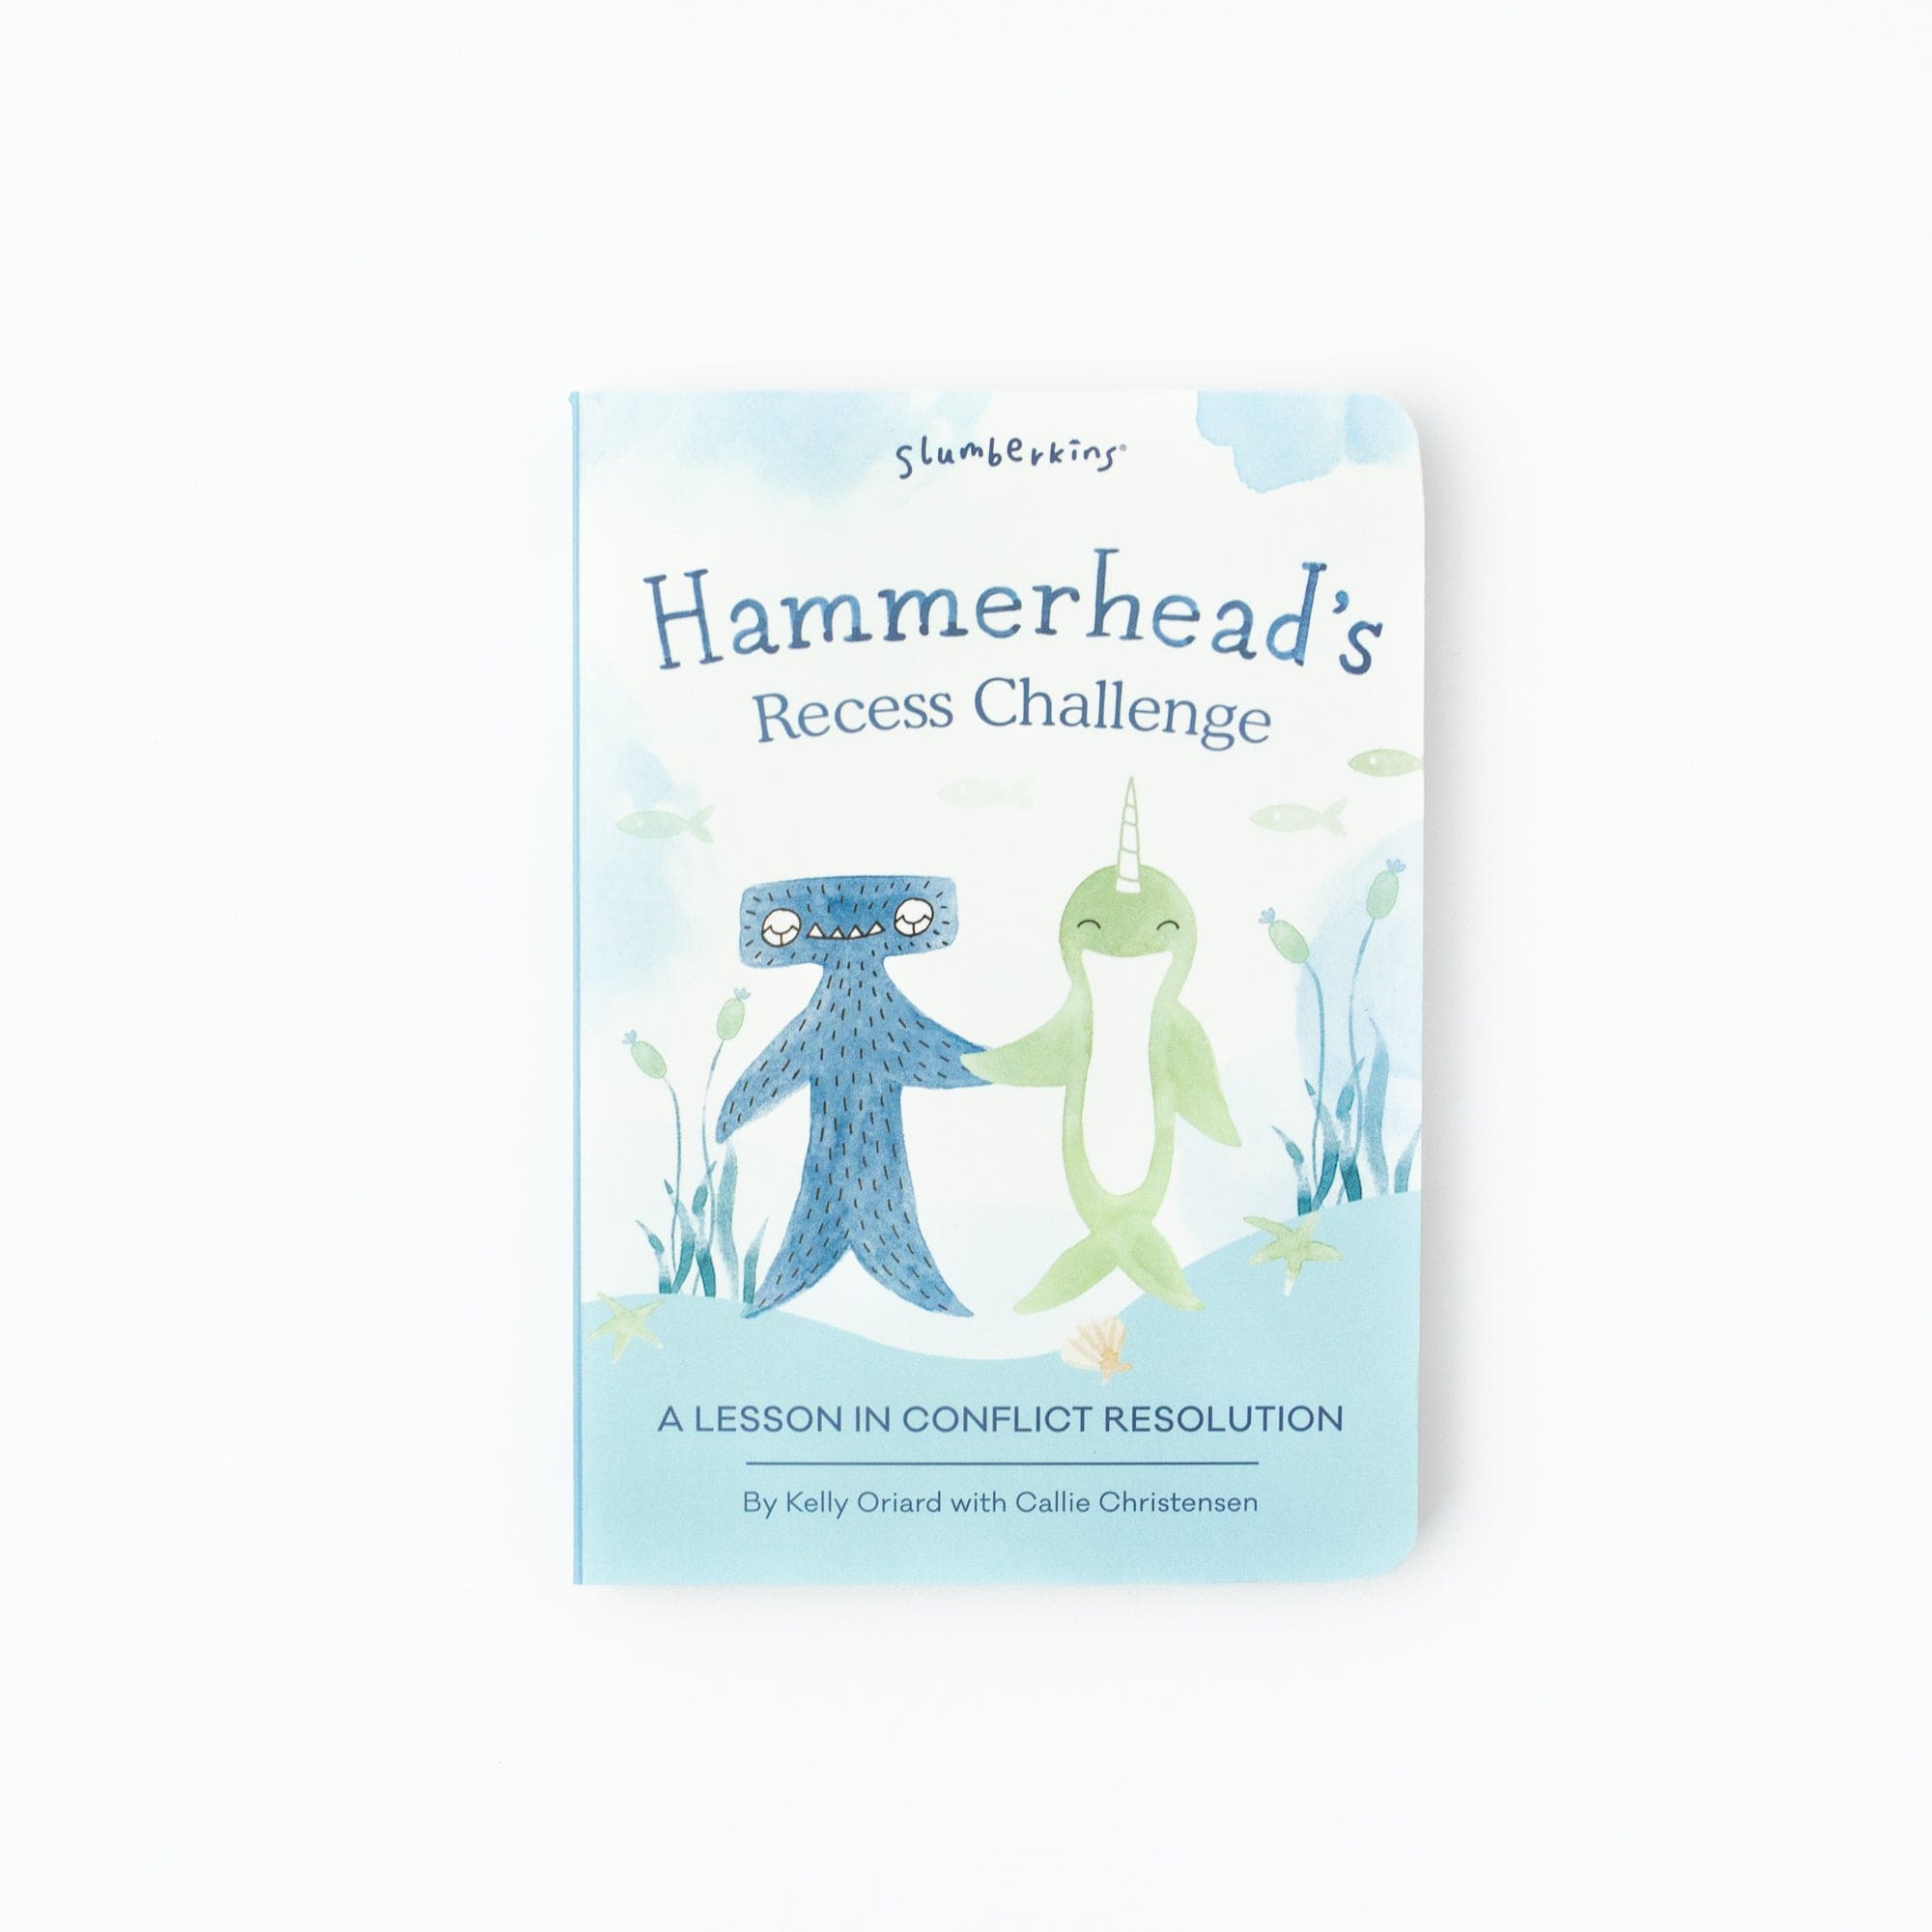 Hammerhead Recess Challenge Snuggler - View Product